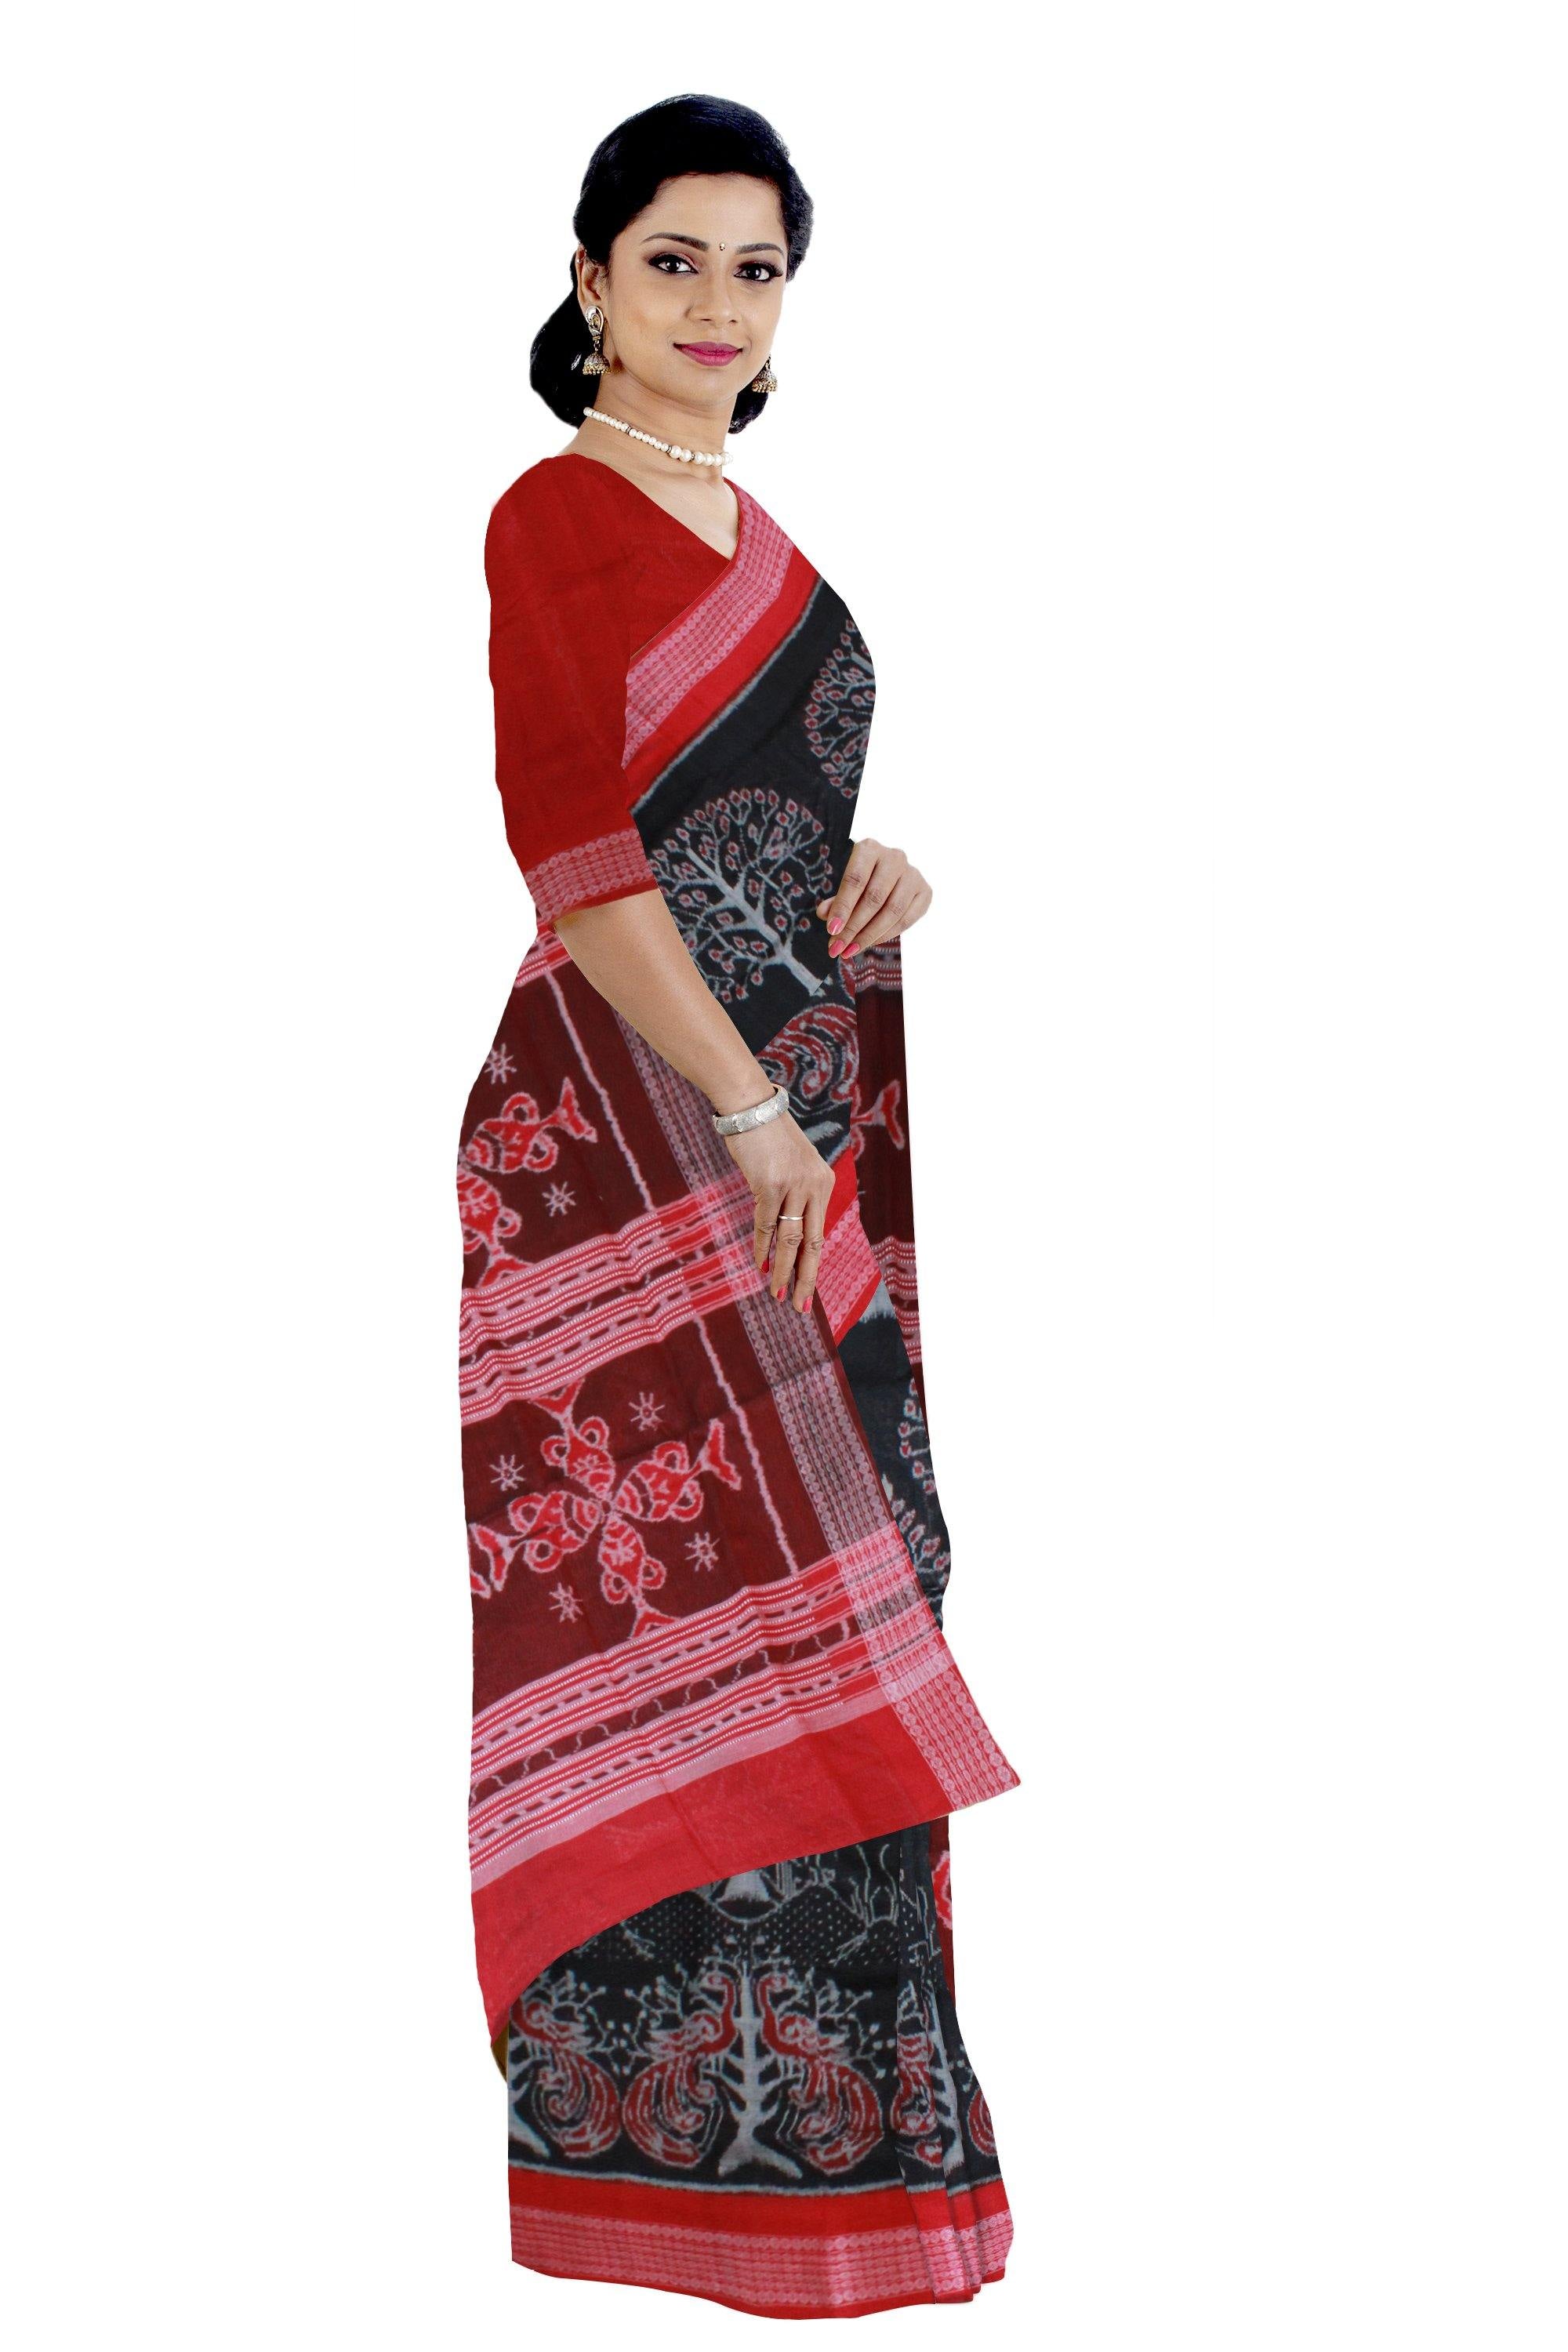 Sambalpuri cotton IKAT saree with tree design - Koshali Arts & Crafts Enterprise